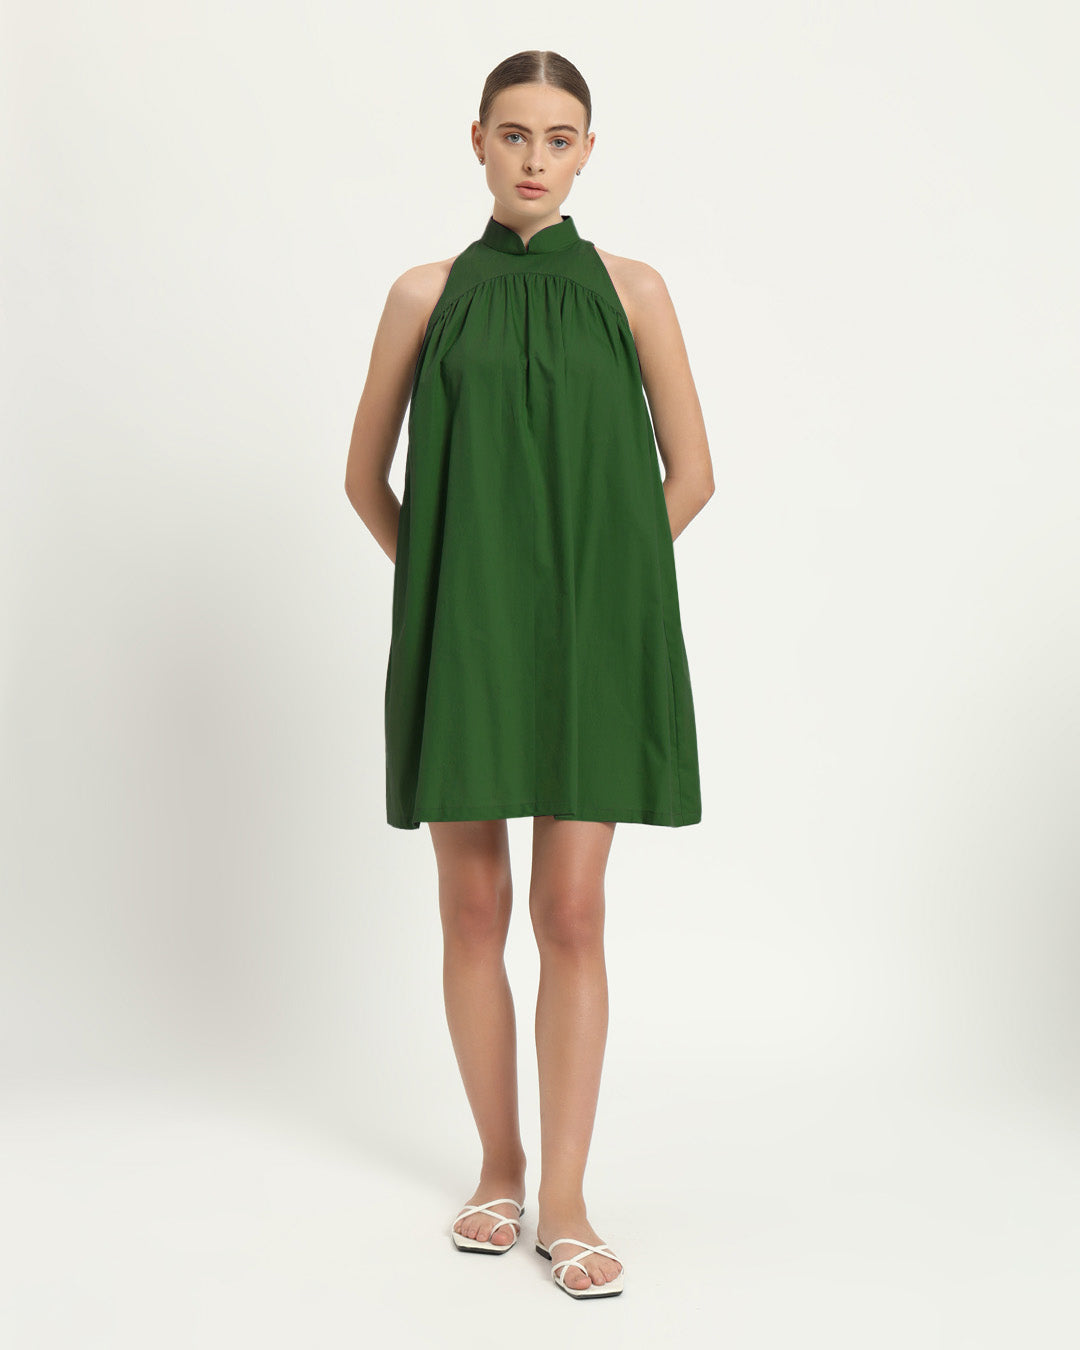 The Eruft Emerald Cotton Dress